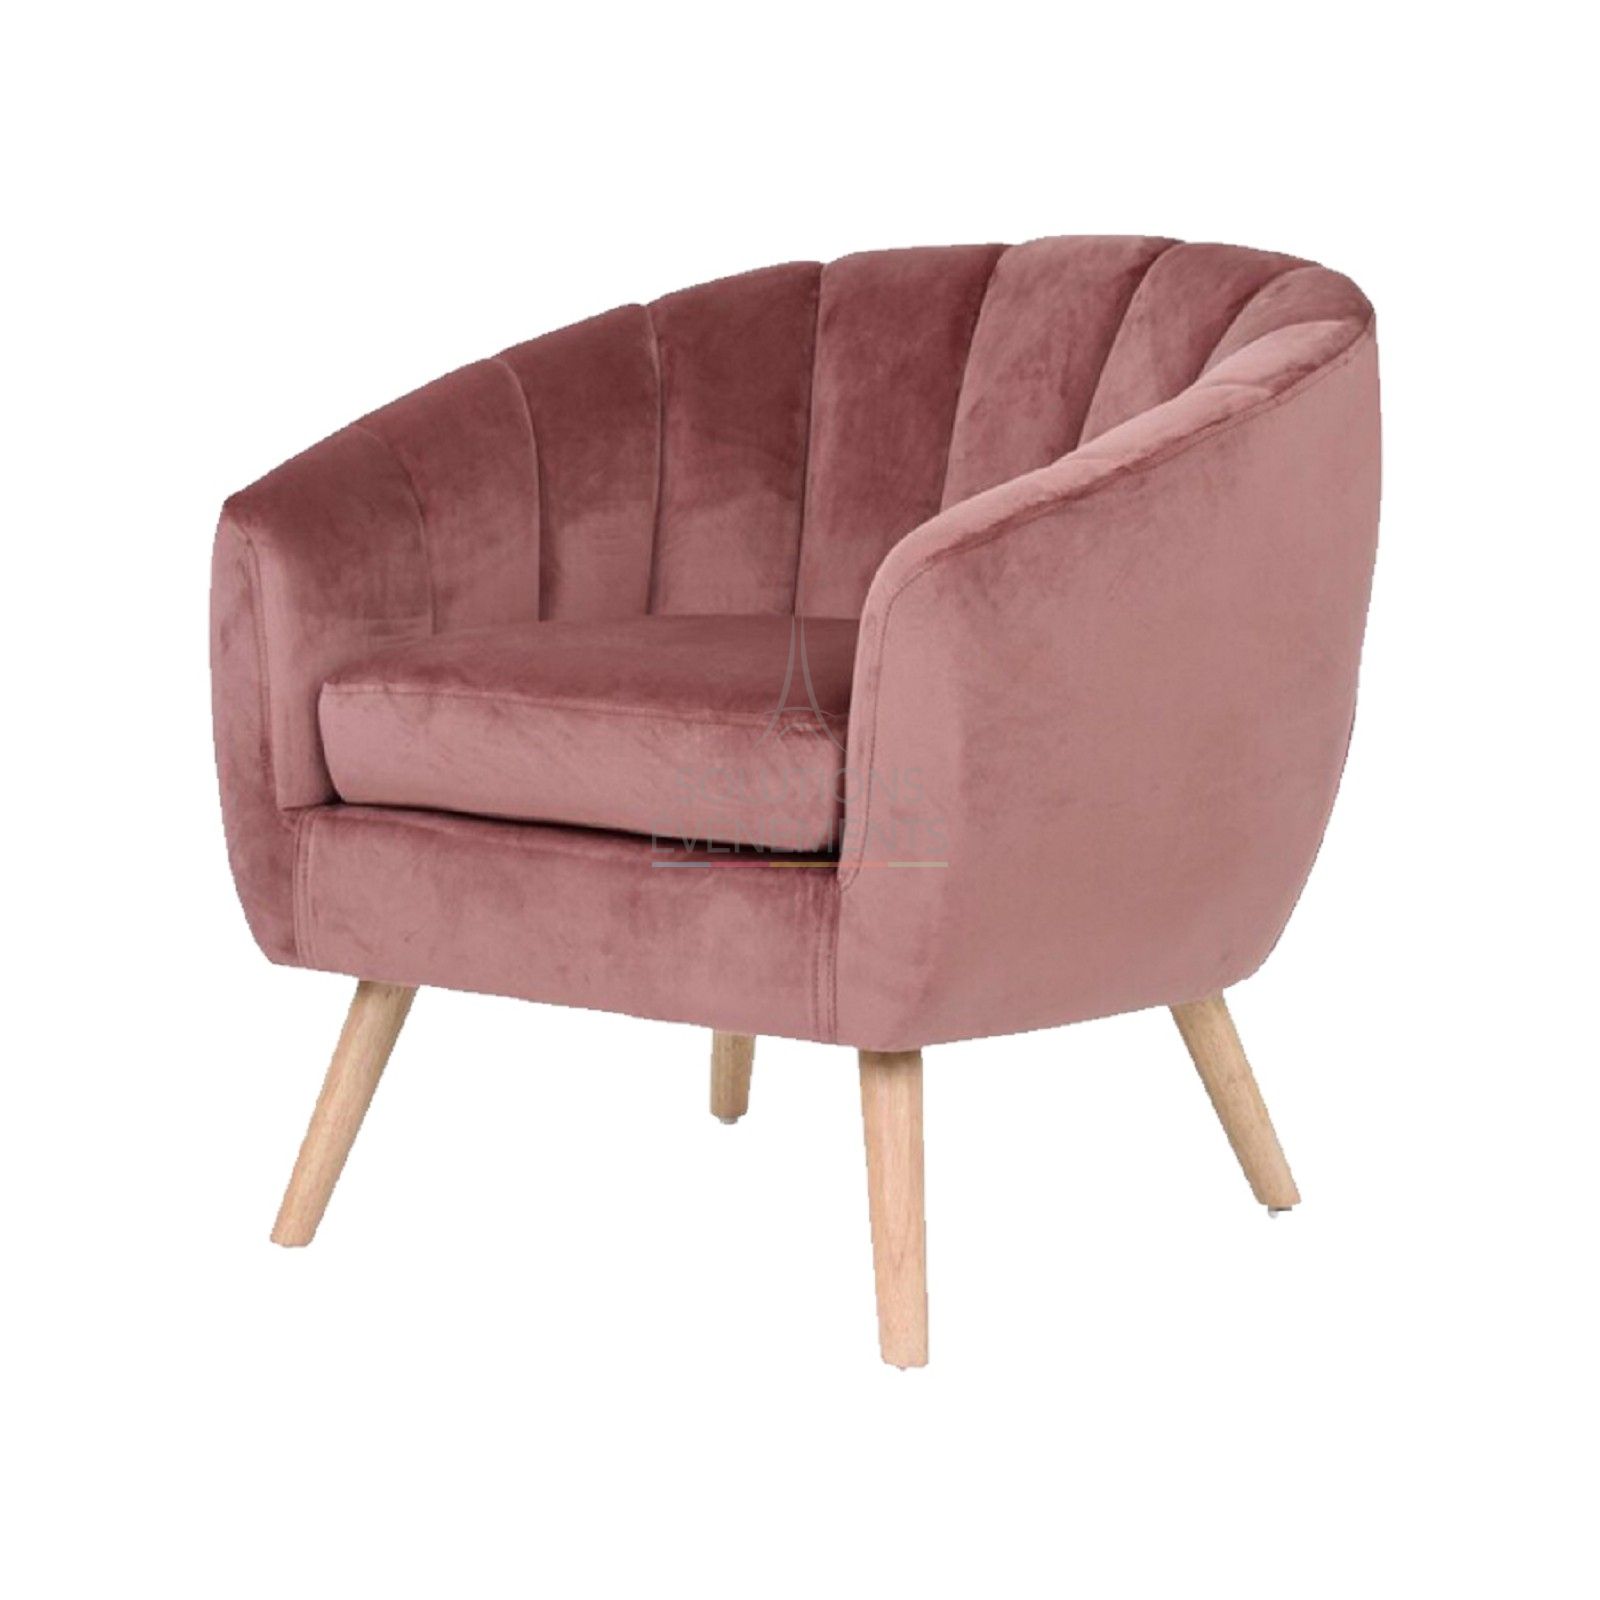 Pink velvet armchair rental